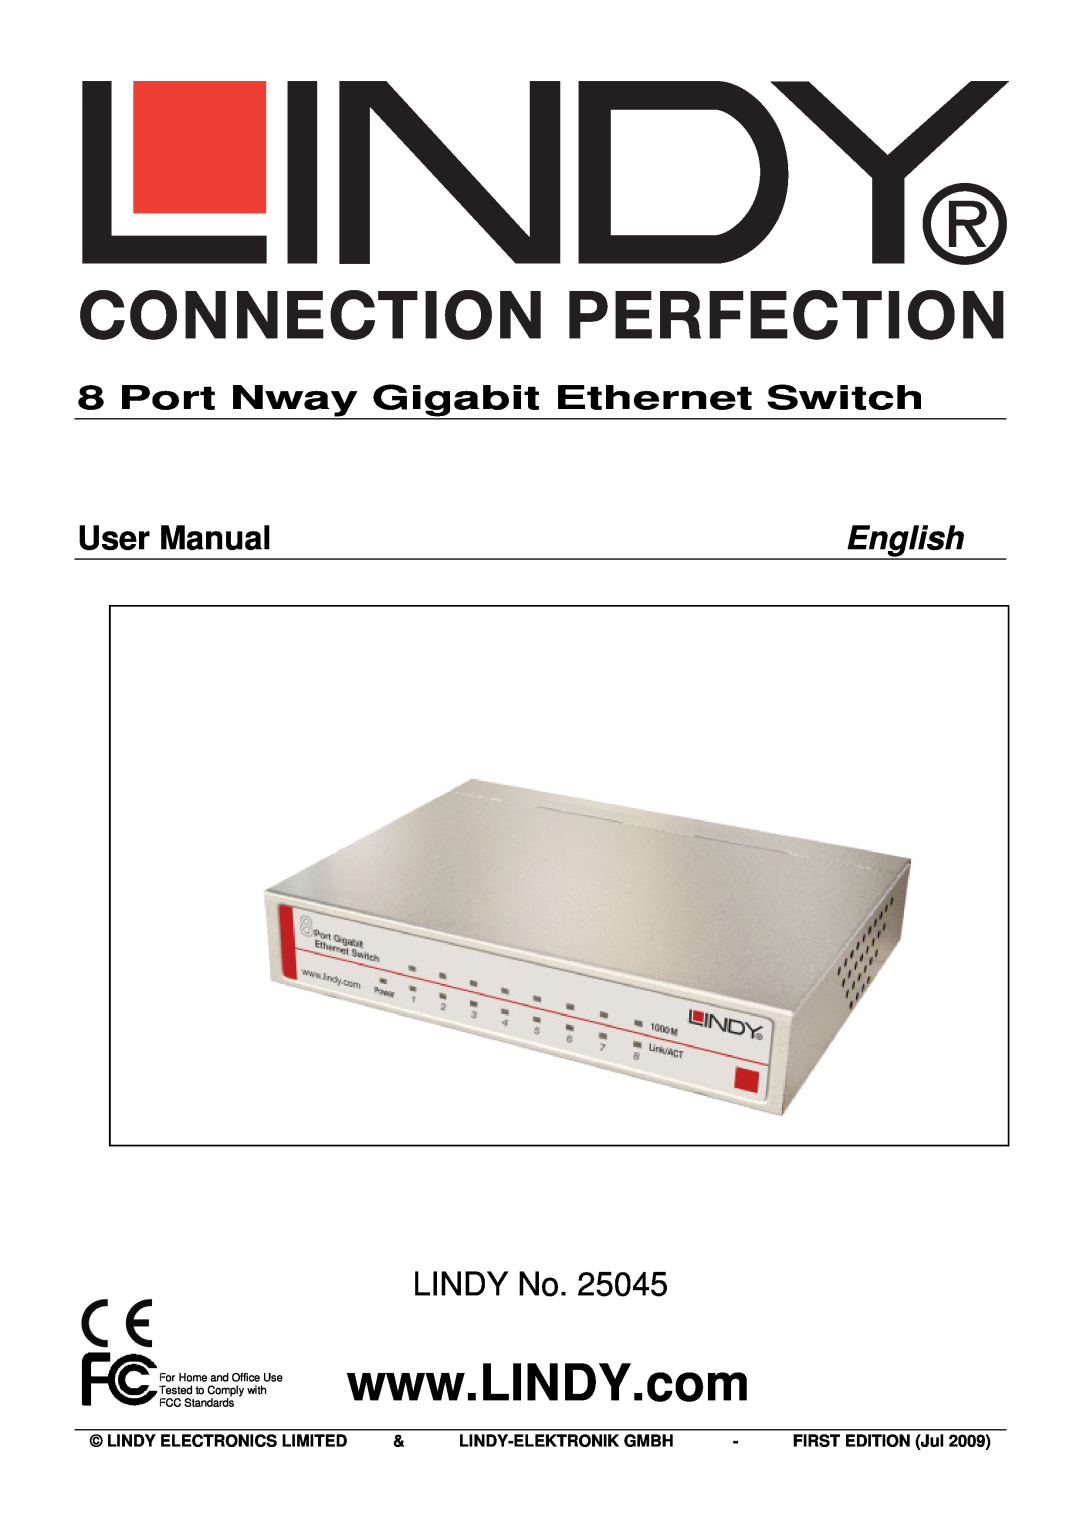 Lindy 25045 user manual English, w ww.LINDY.com, Port Nway Gigabit Ethernet Switch, LINDY No, Lindy Electronics Limited 